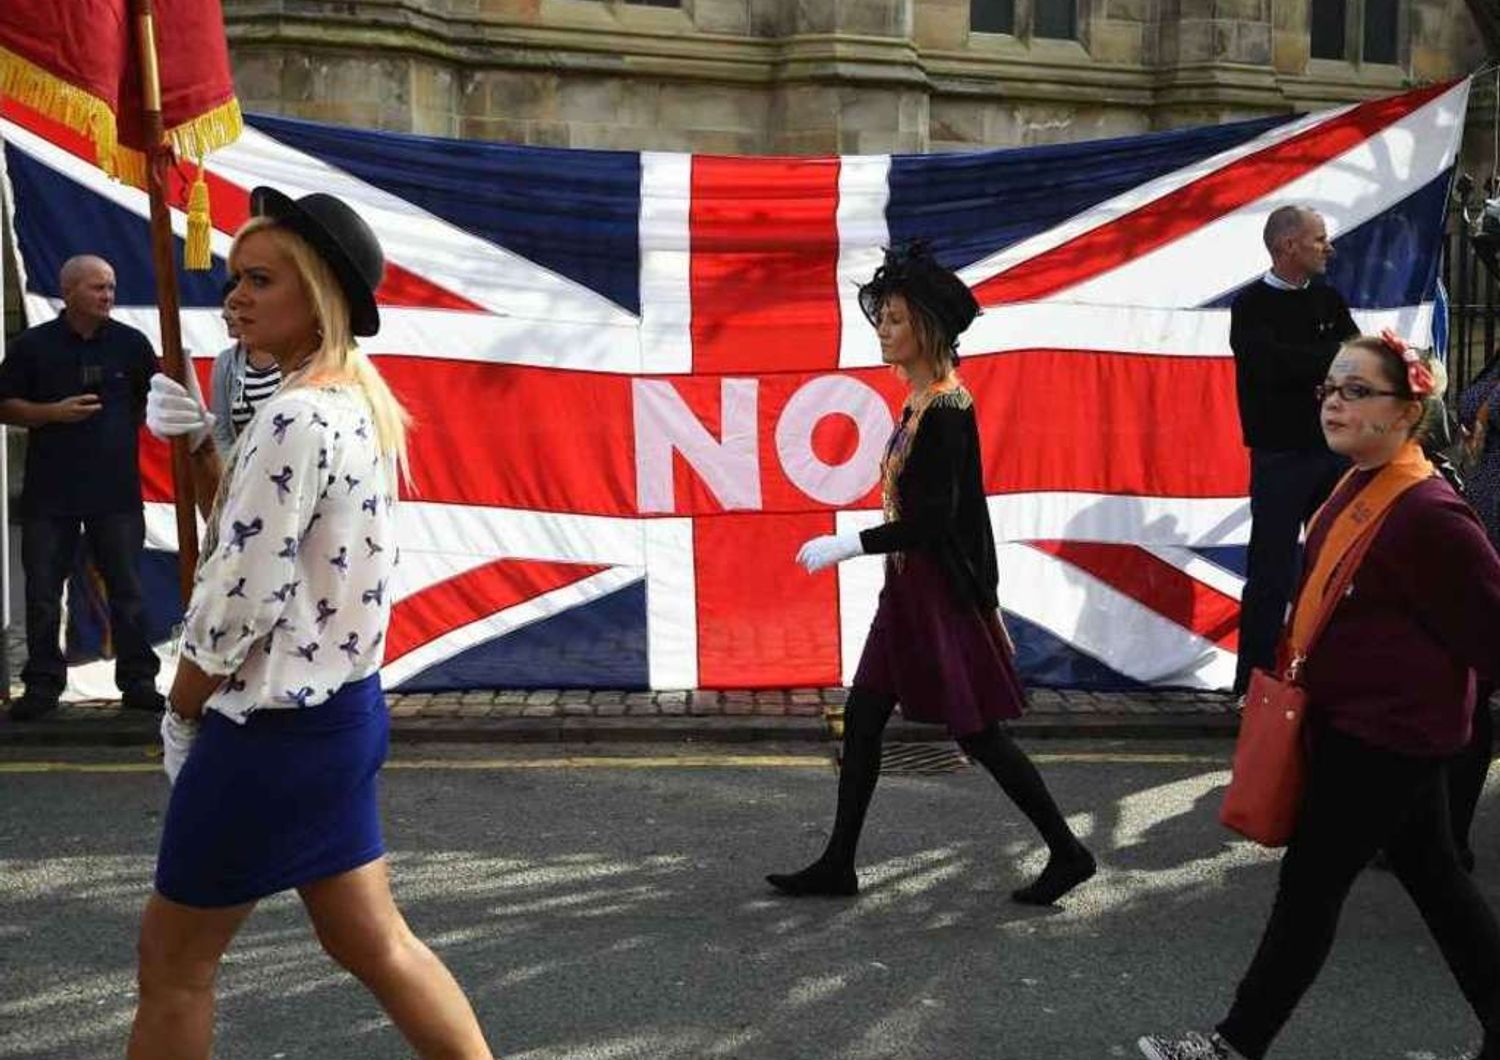 Scozia: decideranno gli indecisi Elisabetta II, "pensateci bene"